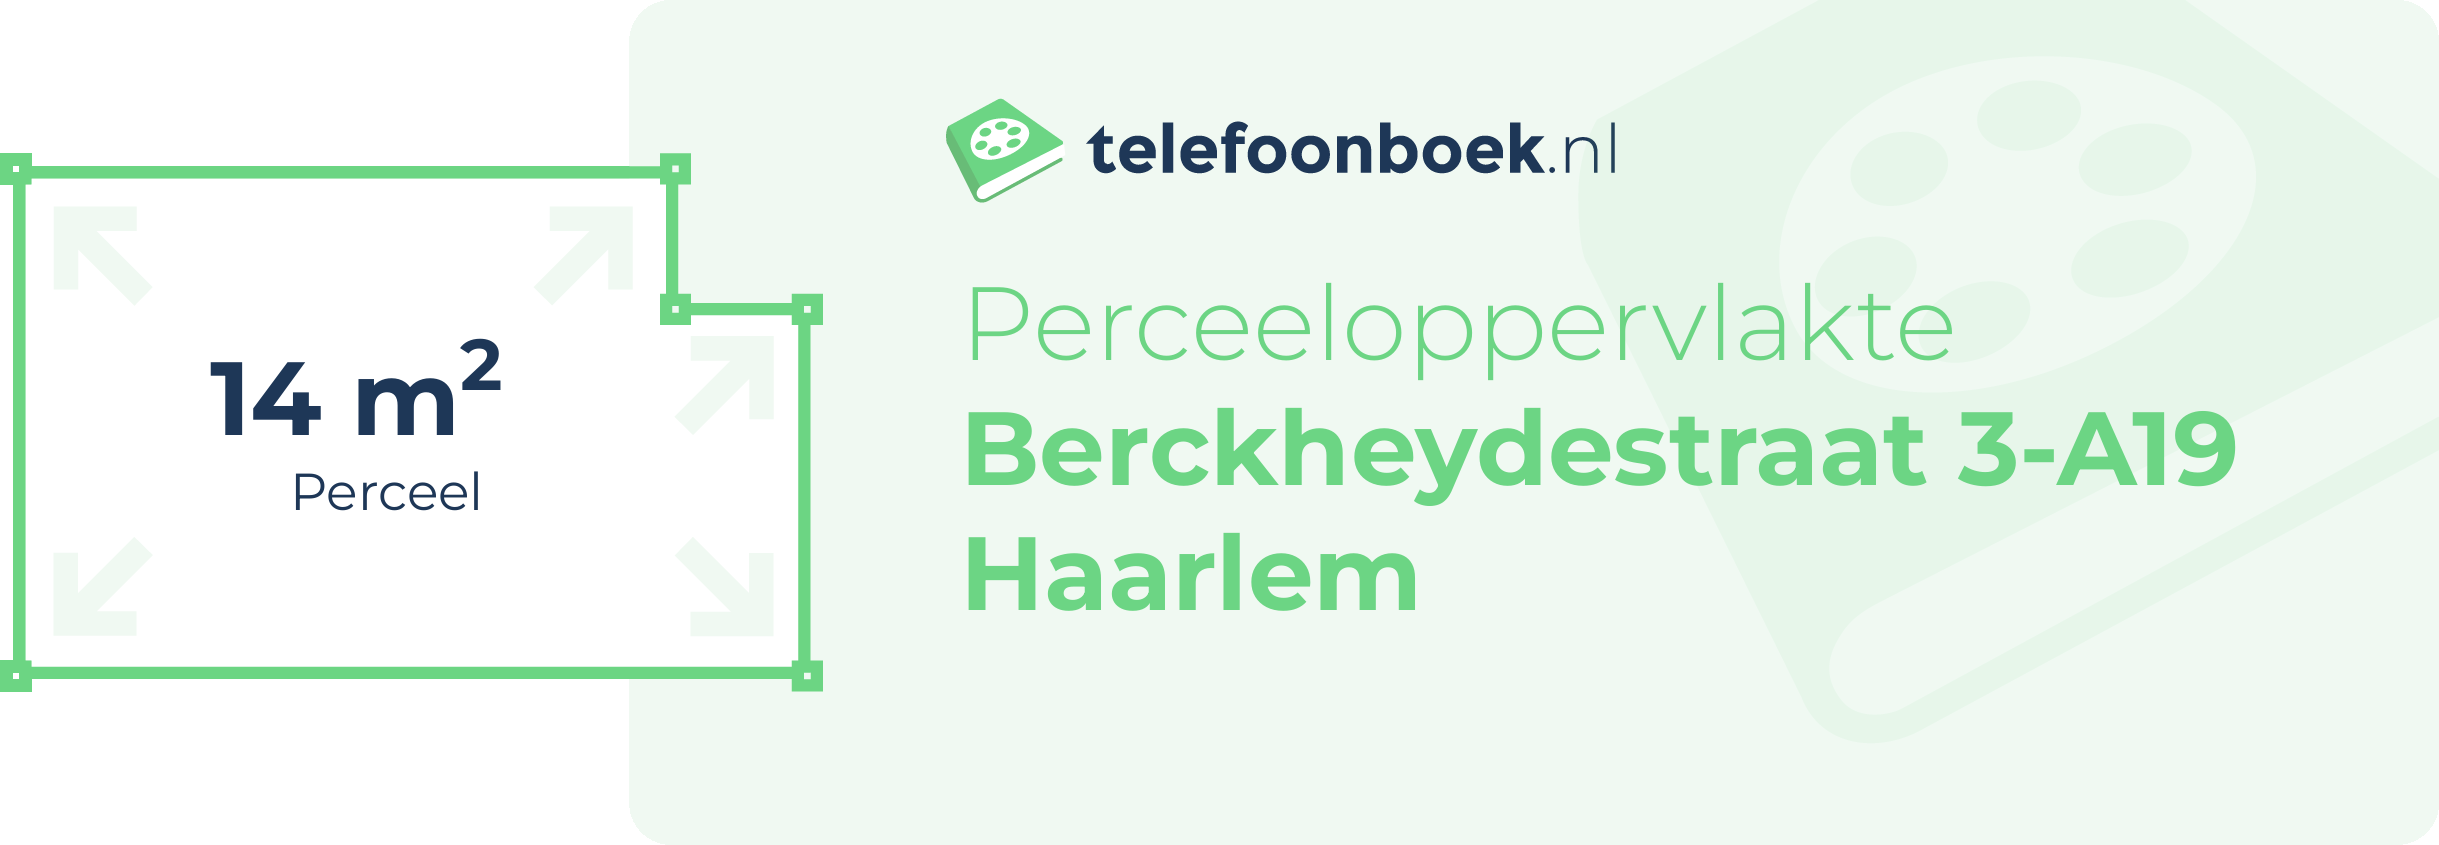 Perceeloppervlakte Berckheydestraat 3-A19 Haarlem